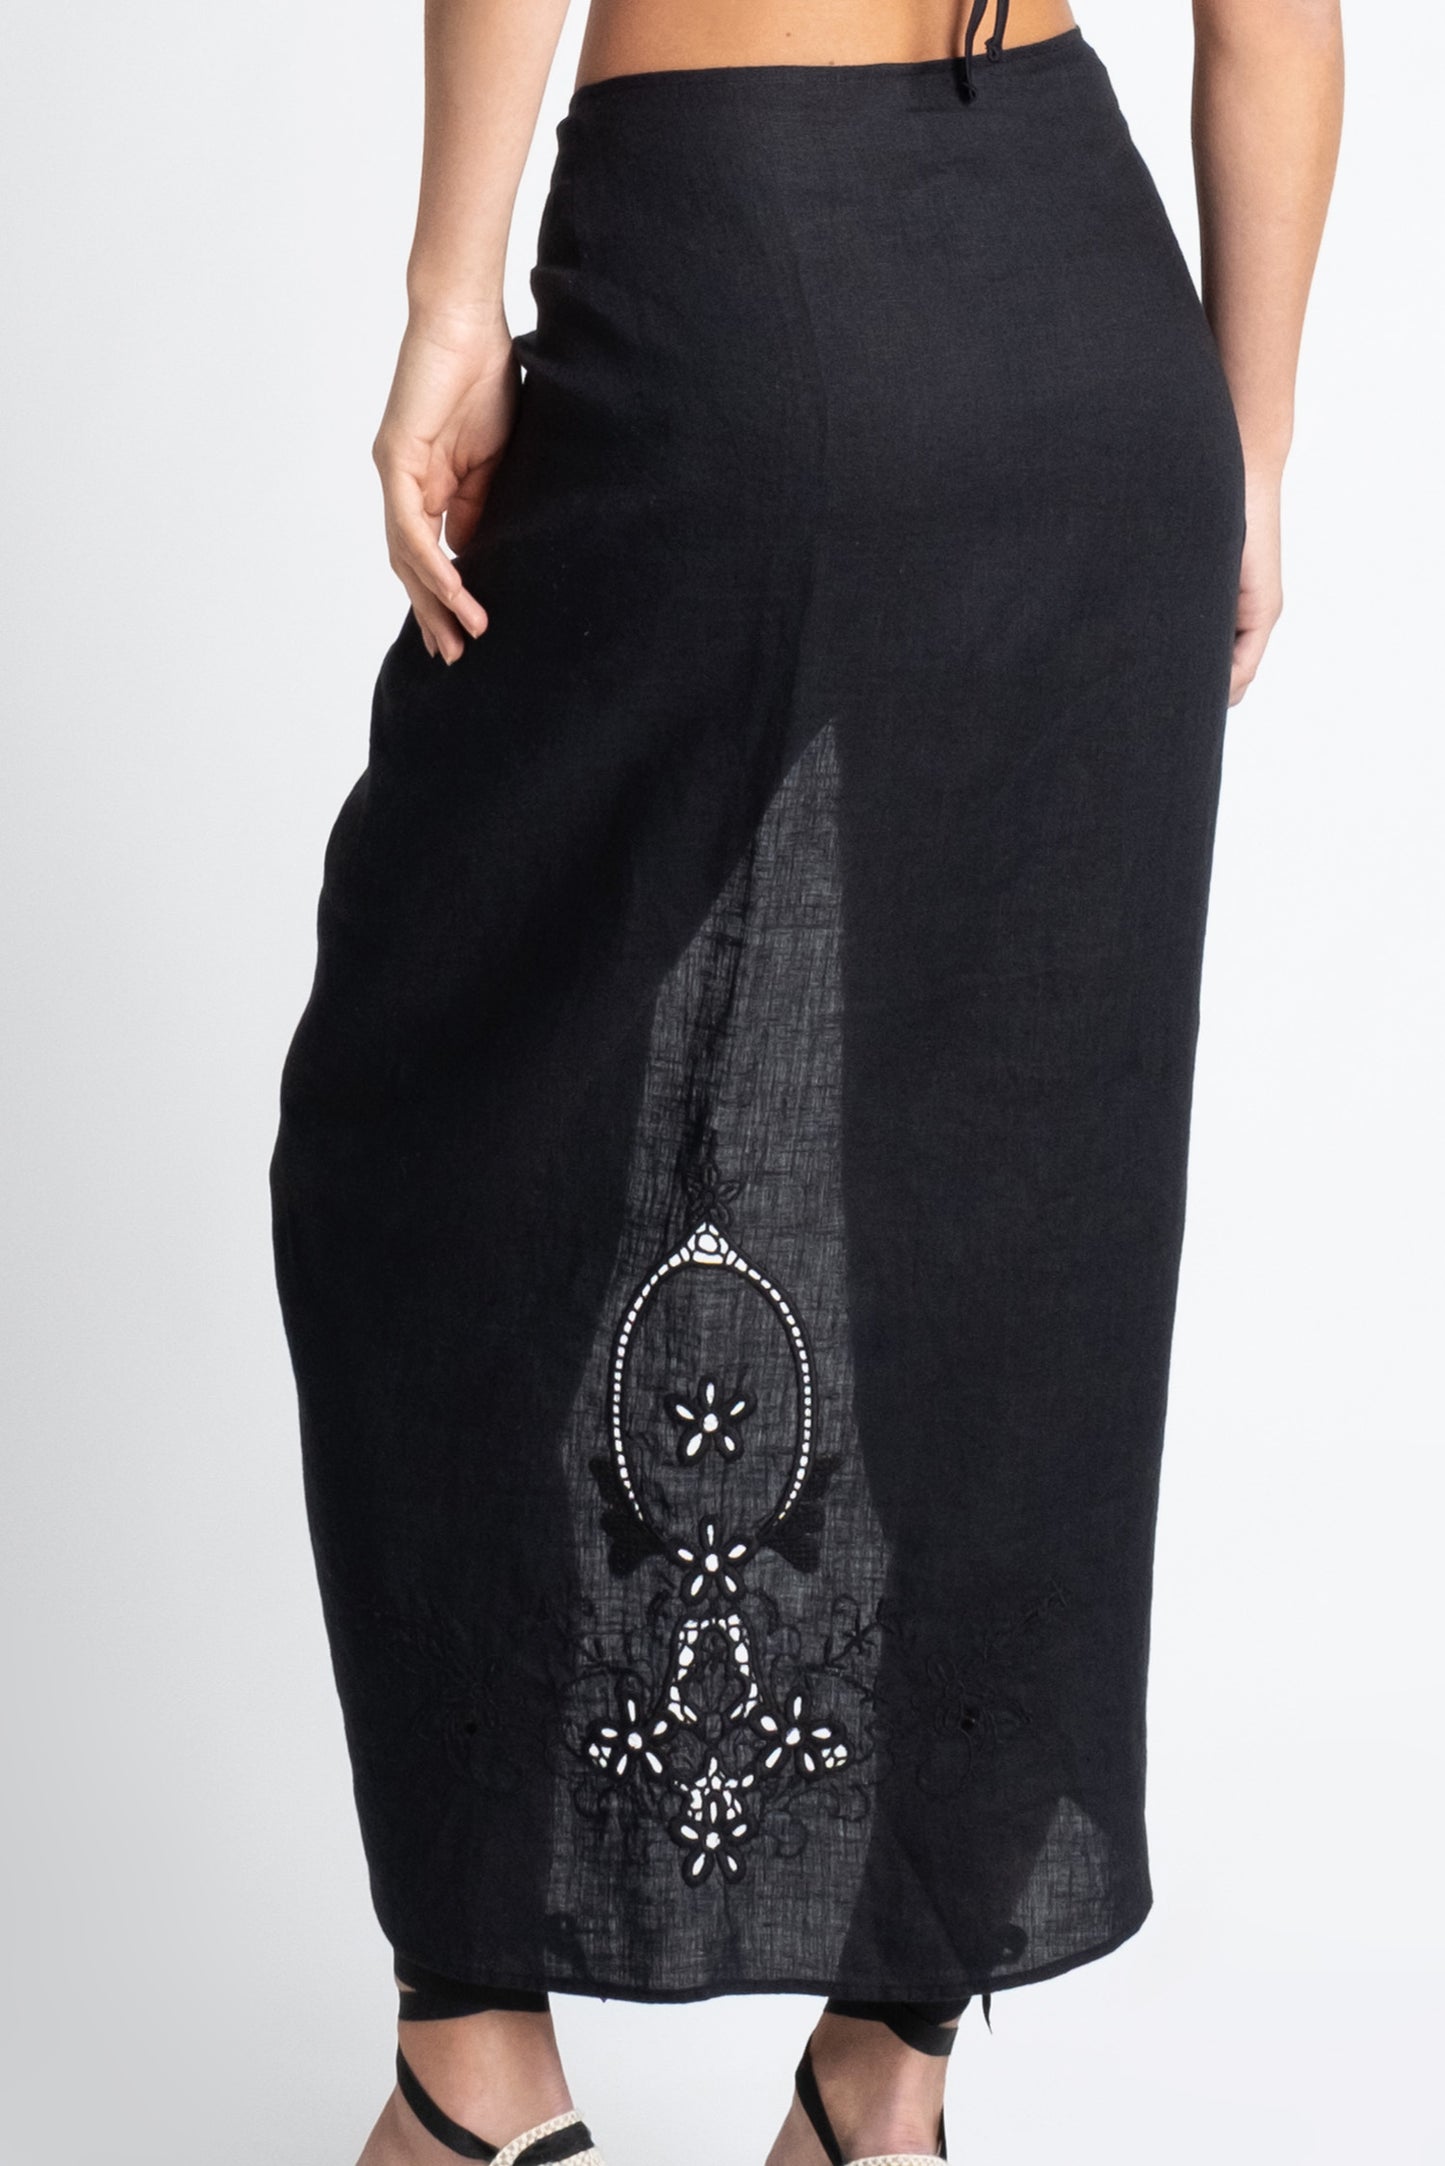 Embroidered black linen sarong.